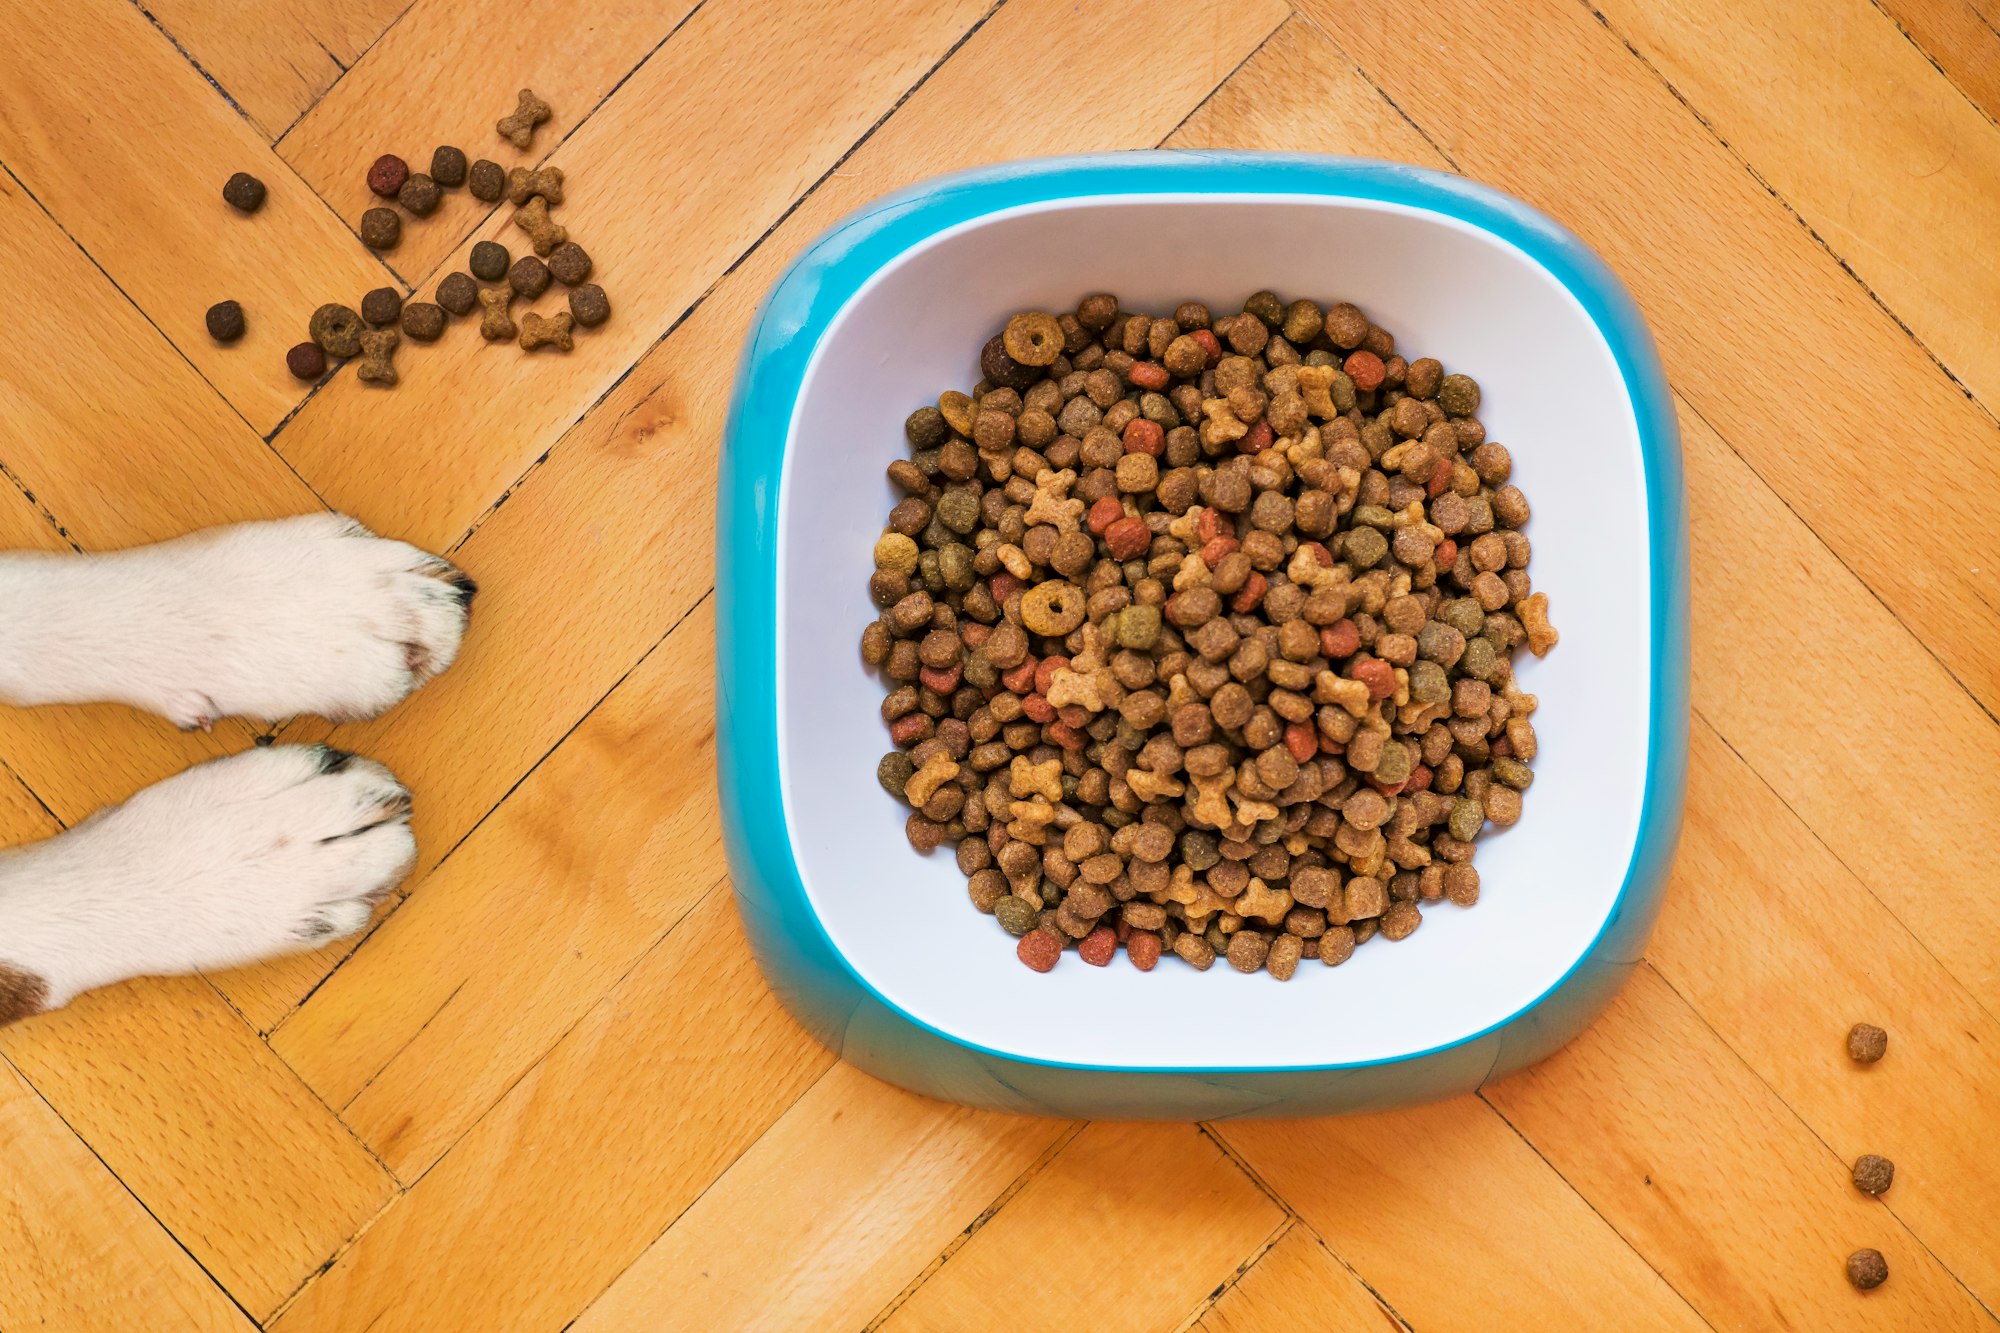 dog food,dog bowl,dog kibble,dry dog food,paws,dog paws,dog food bowl,grain free dog food,dog treat,pet food,dog,pet,dog eating,dog feeding